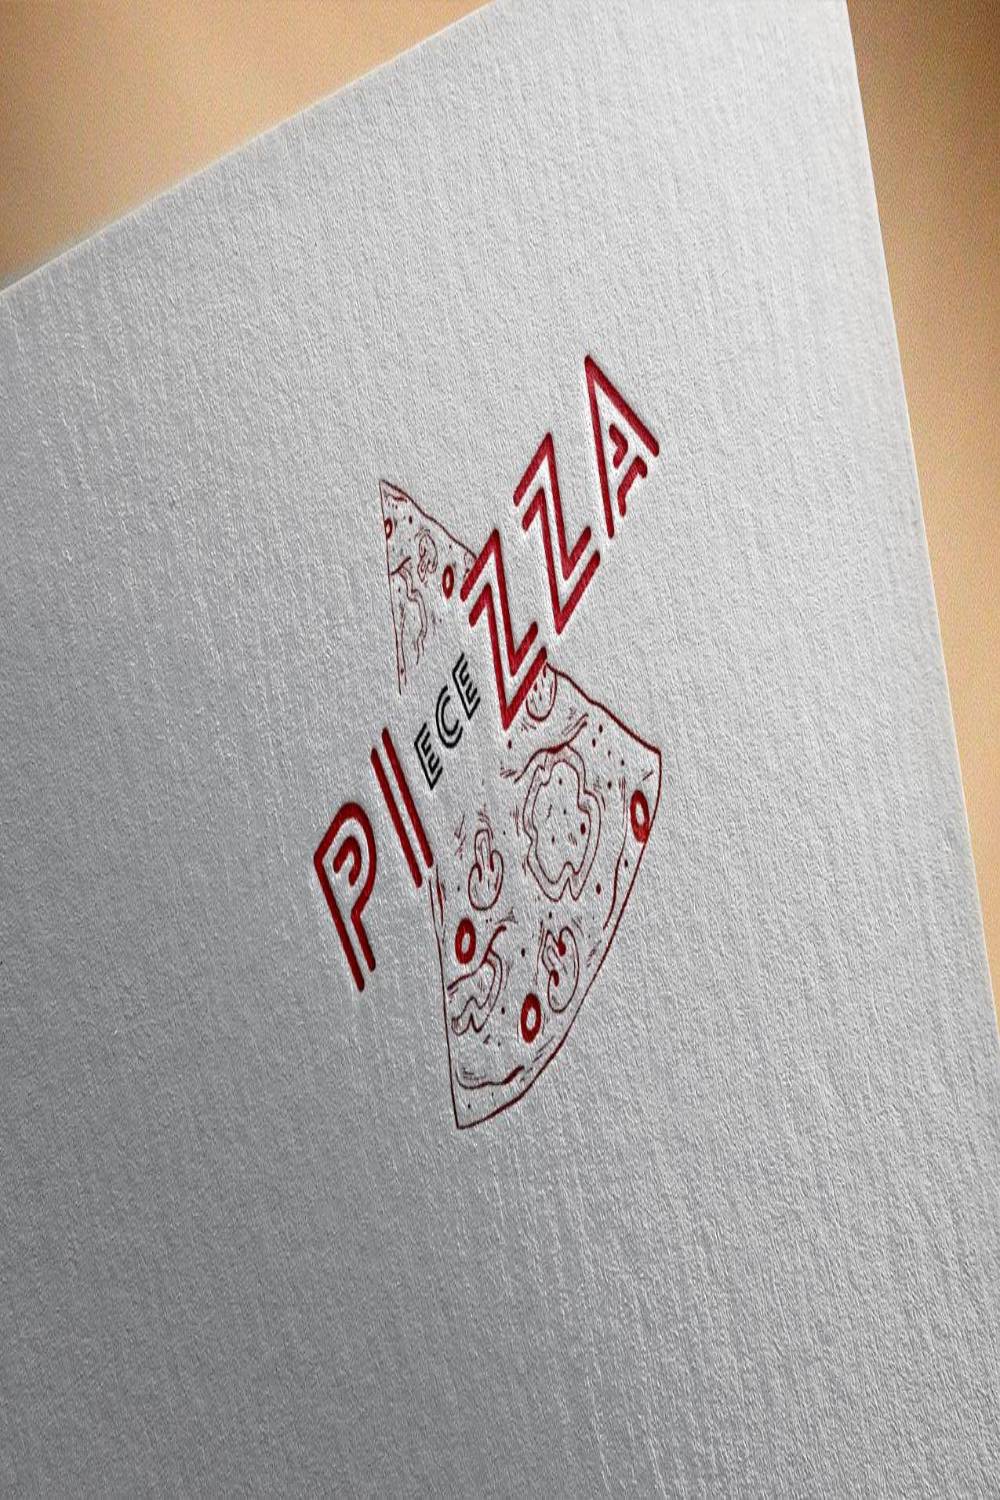 PIeceZZA Pizza Logo Design pinterest image.